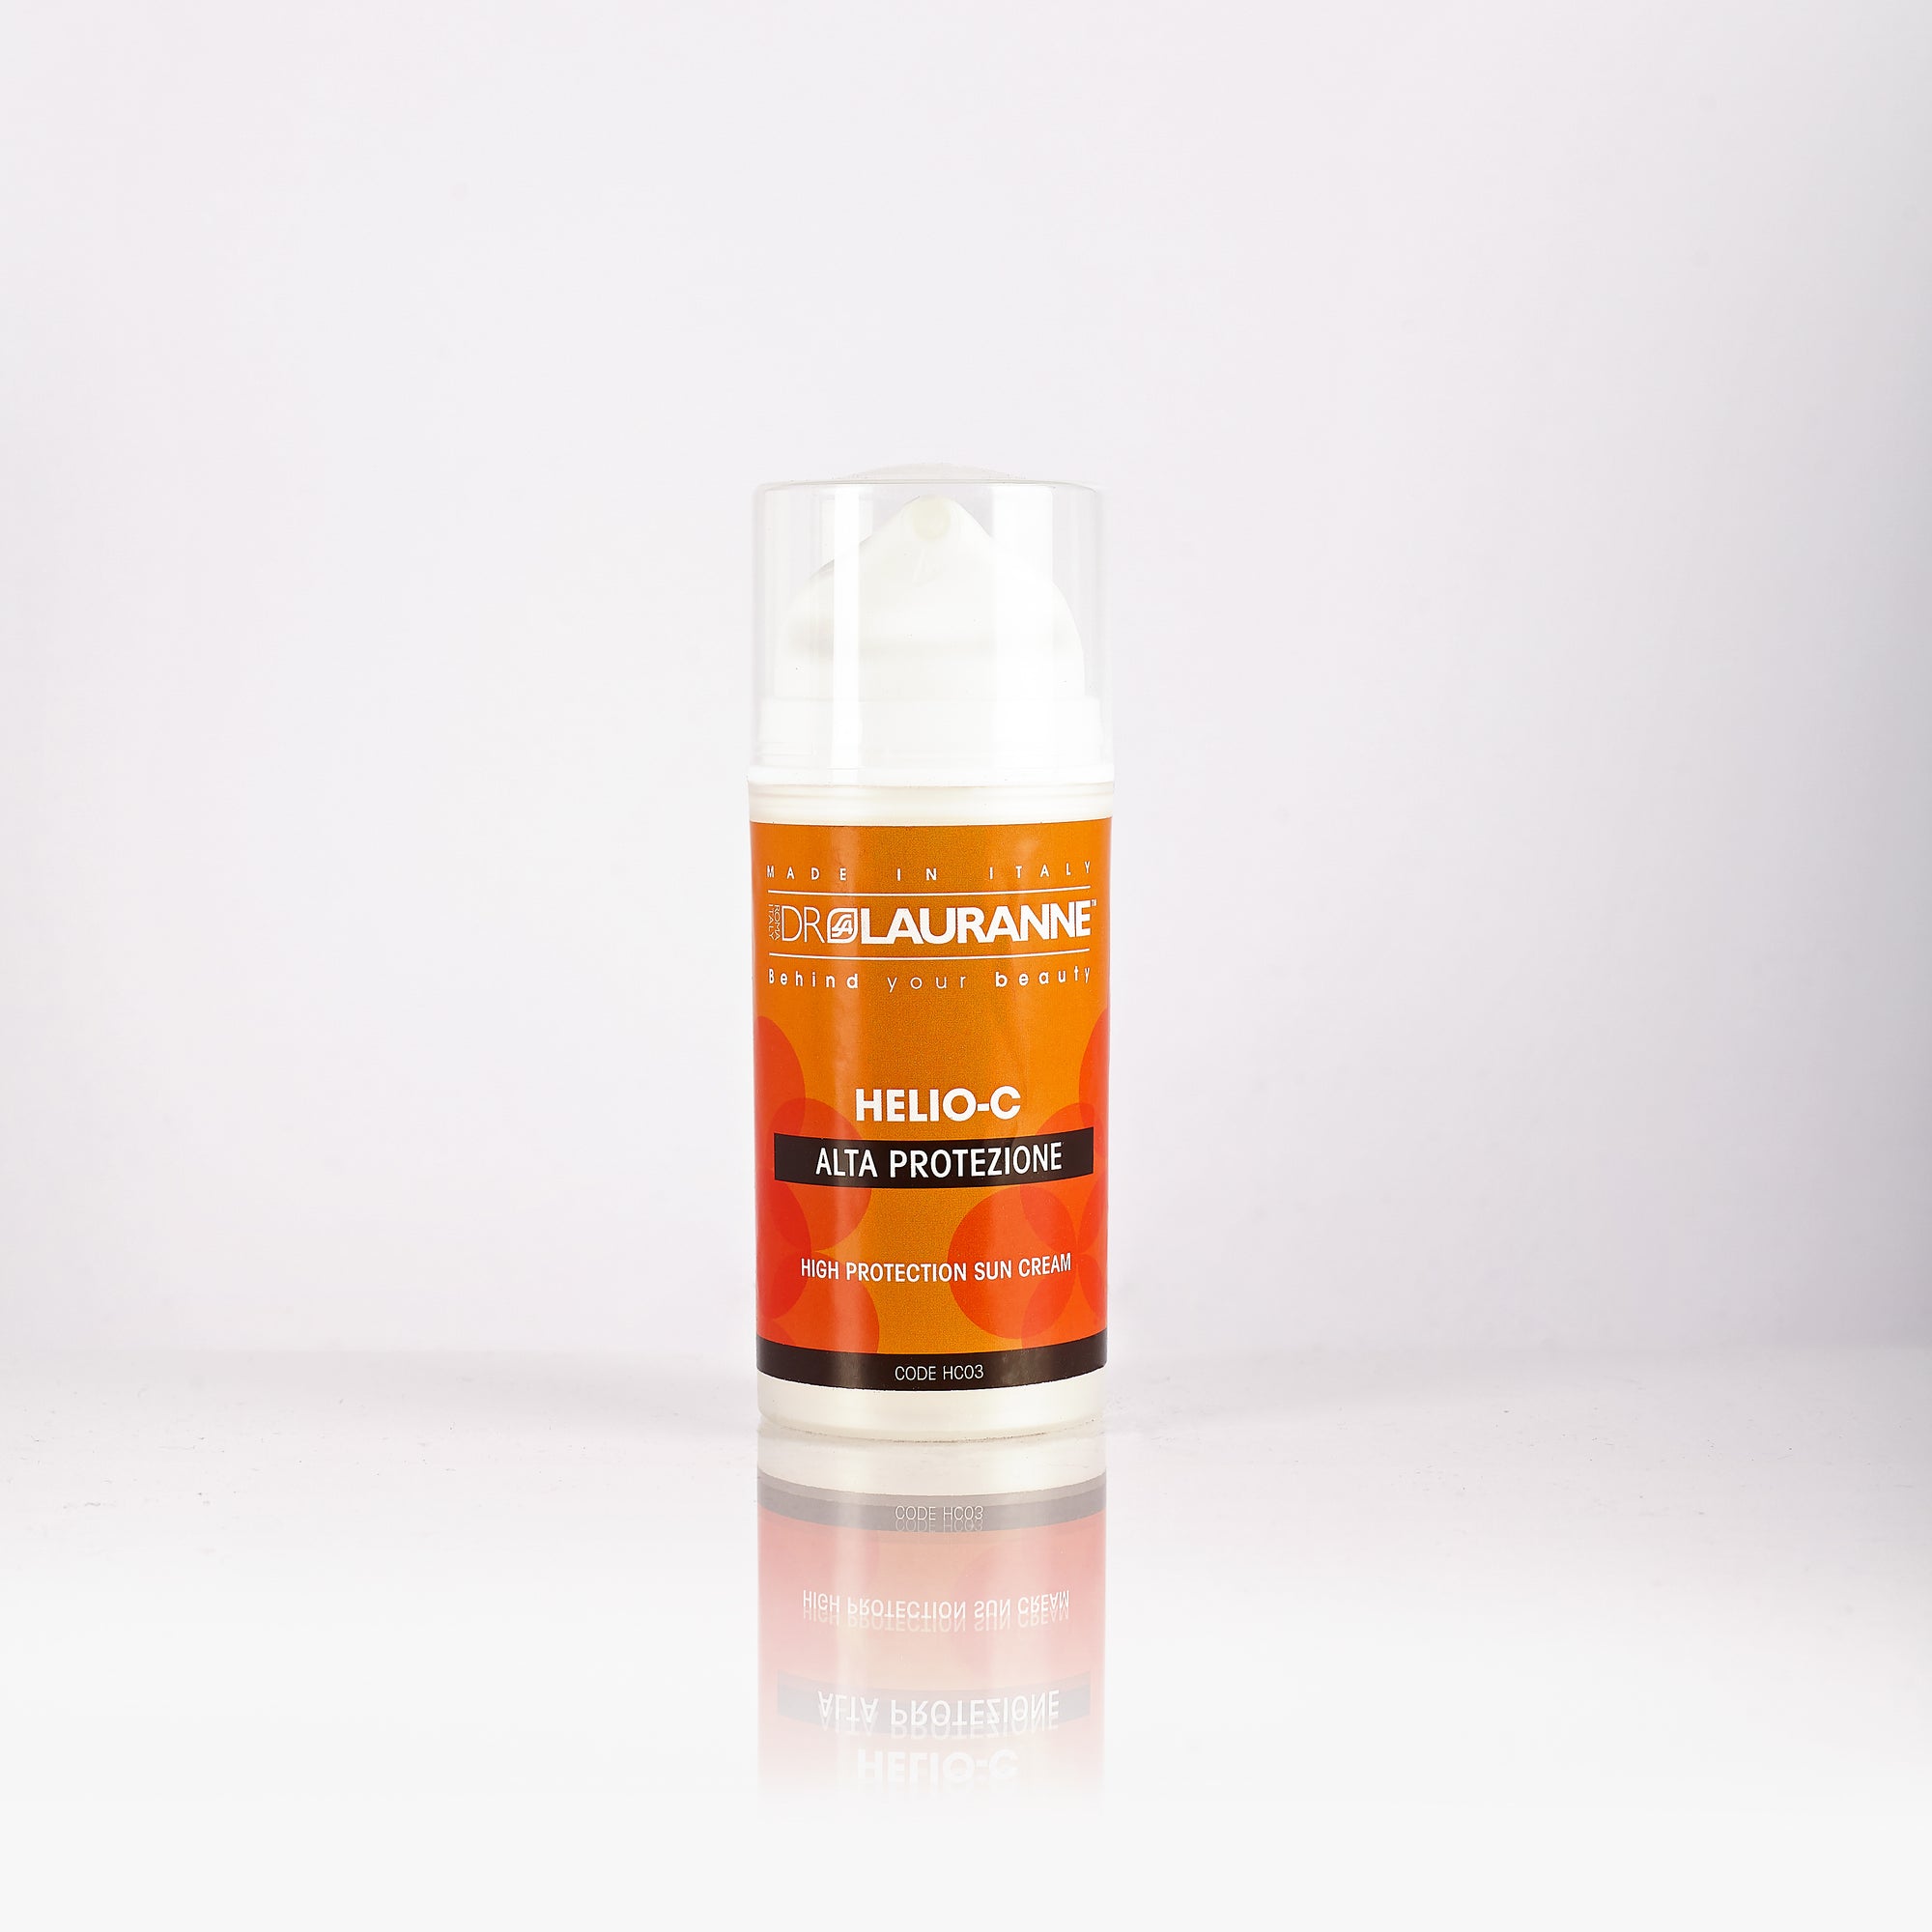 High protection sun cream – DrLauranne